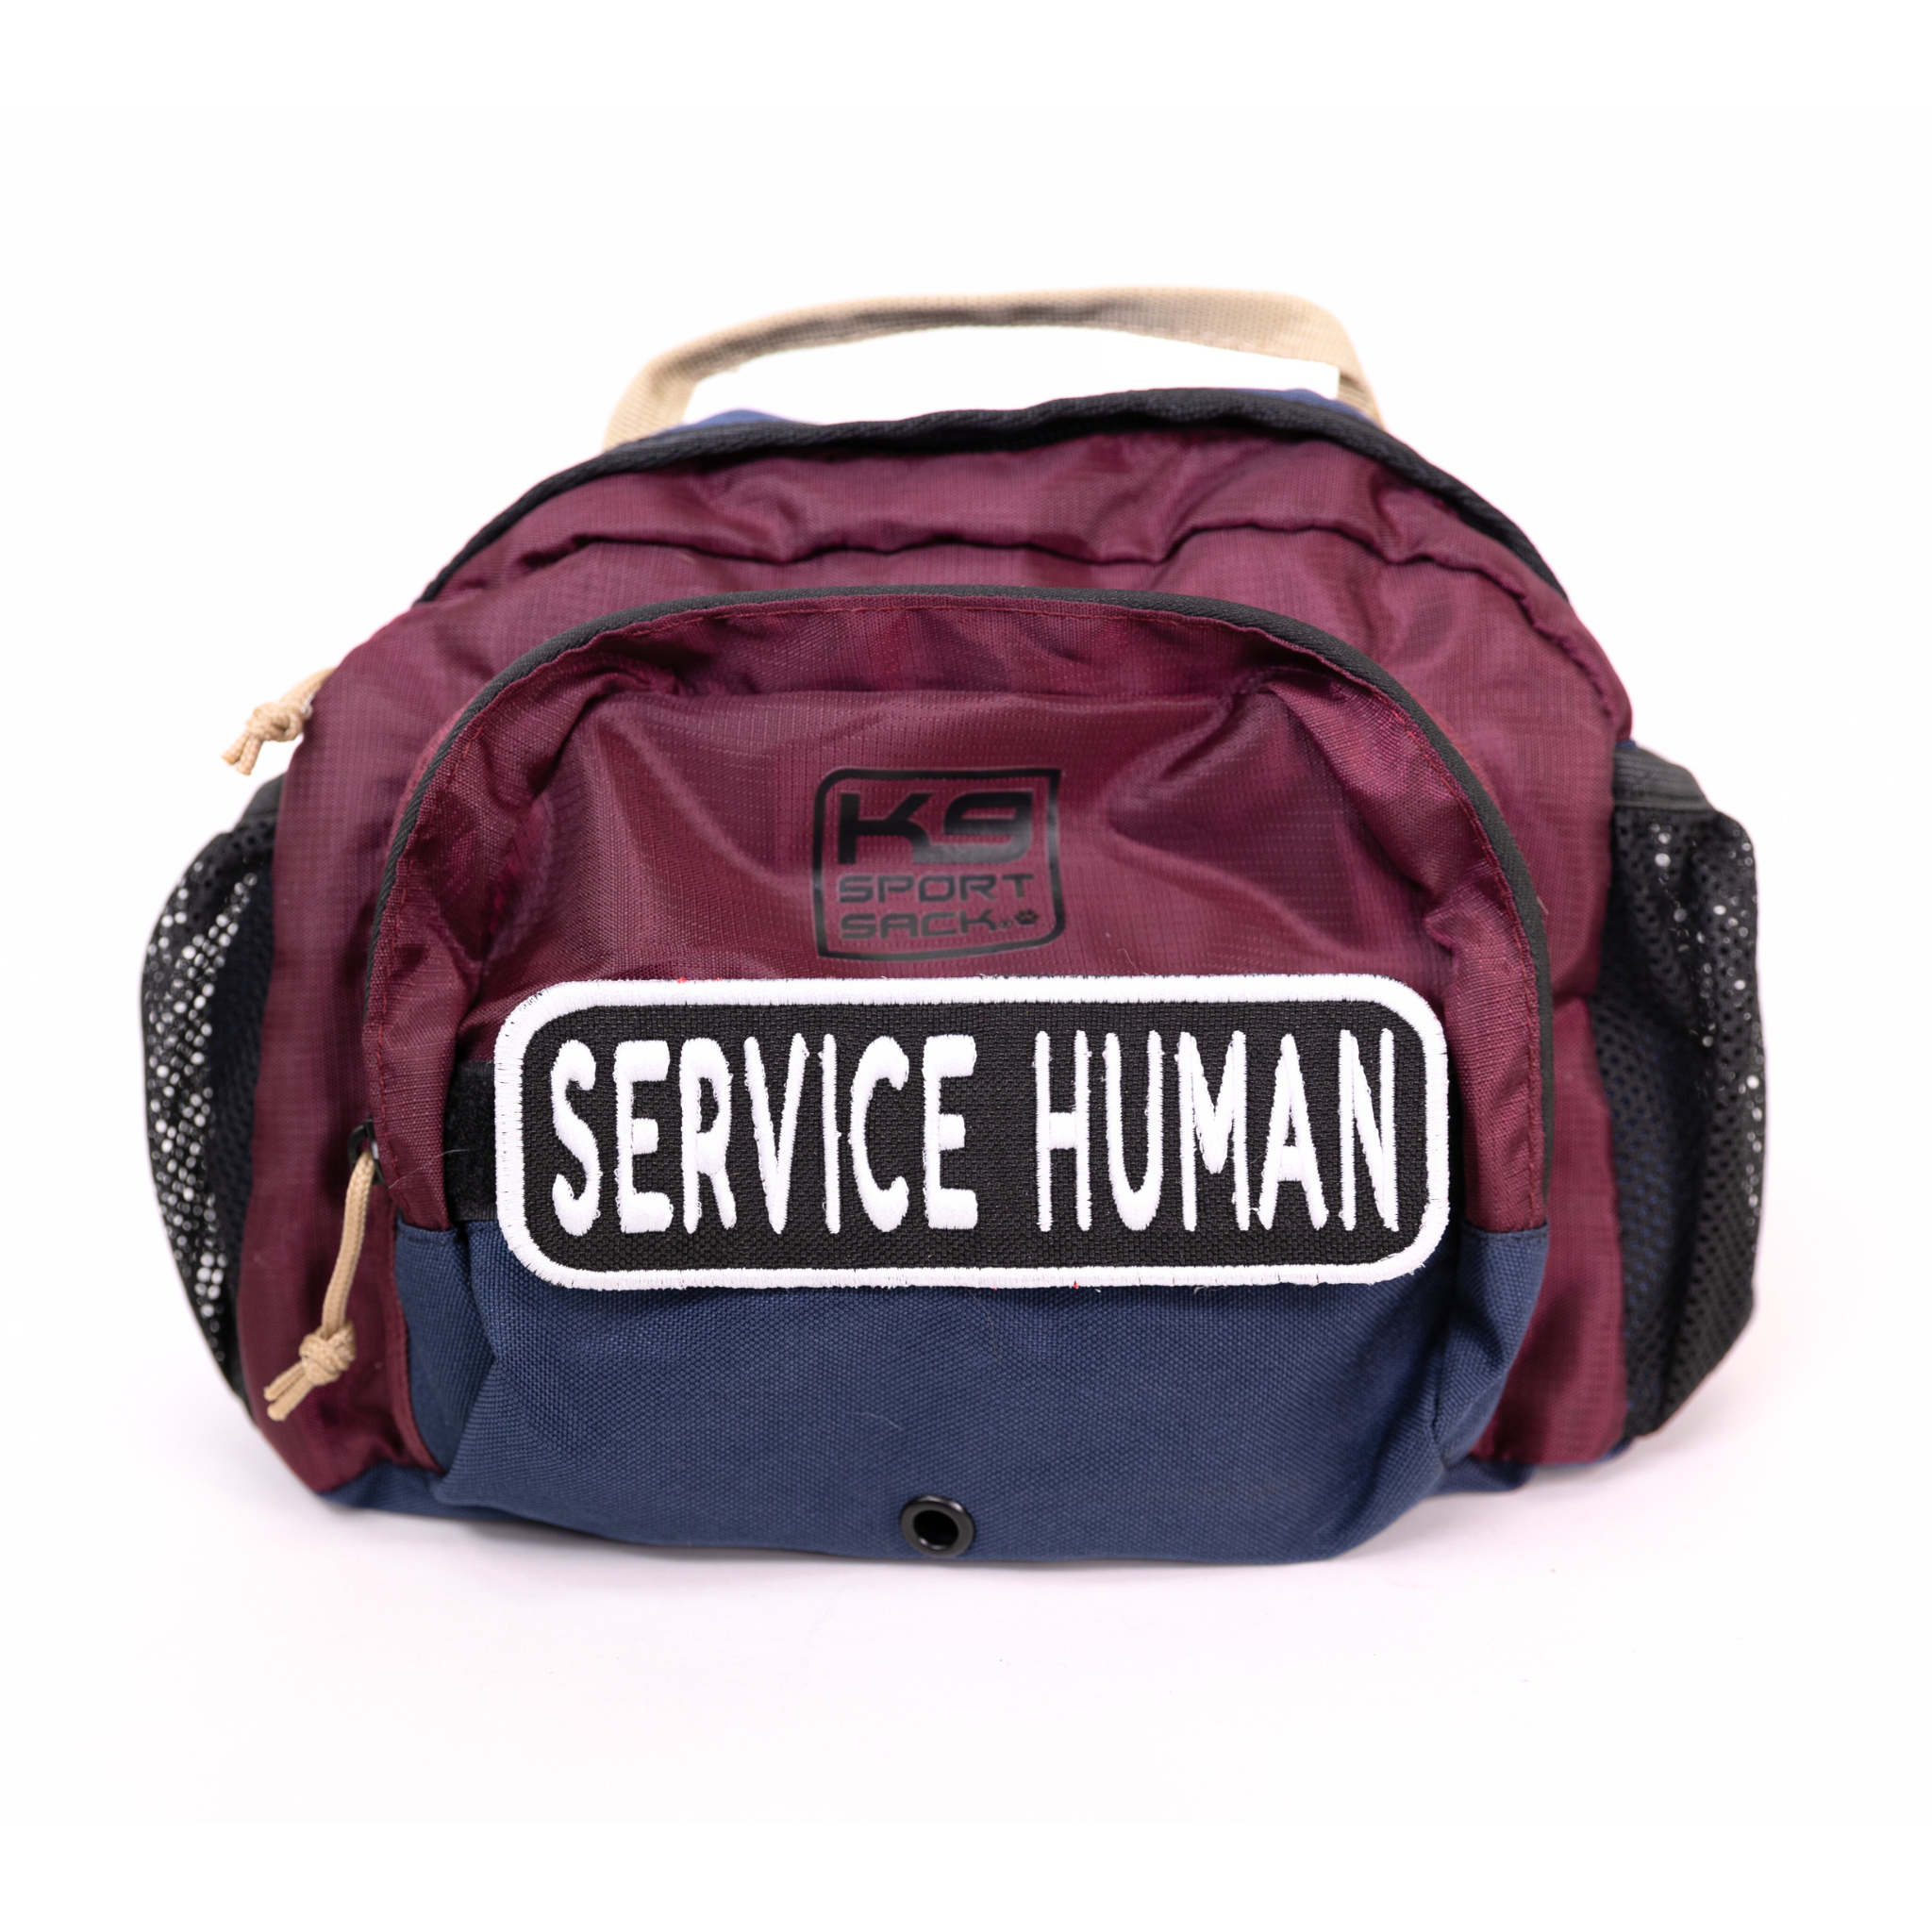 shopify.service.human.png